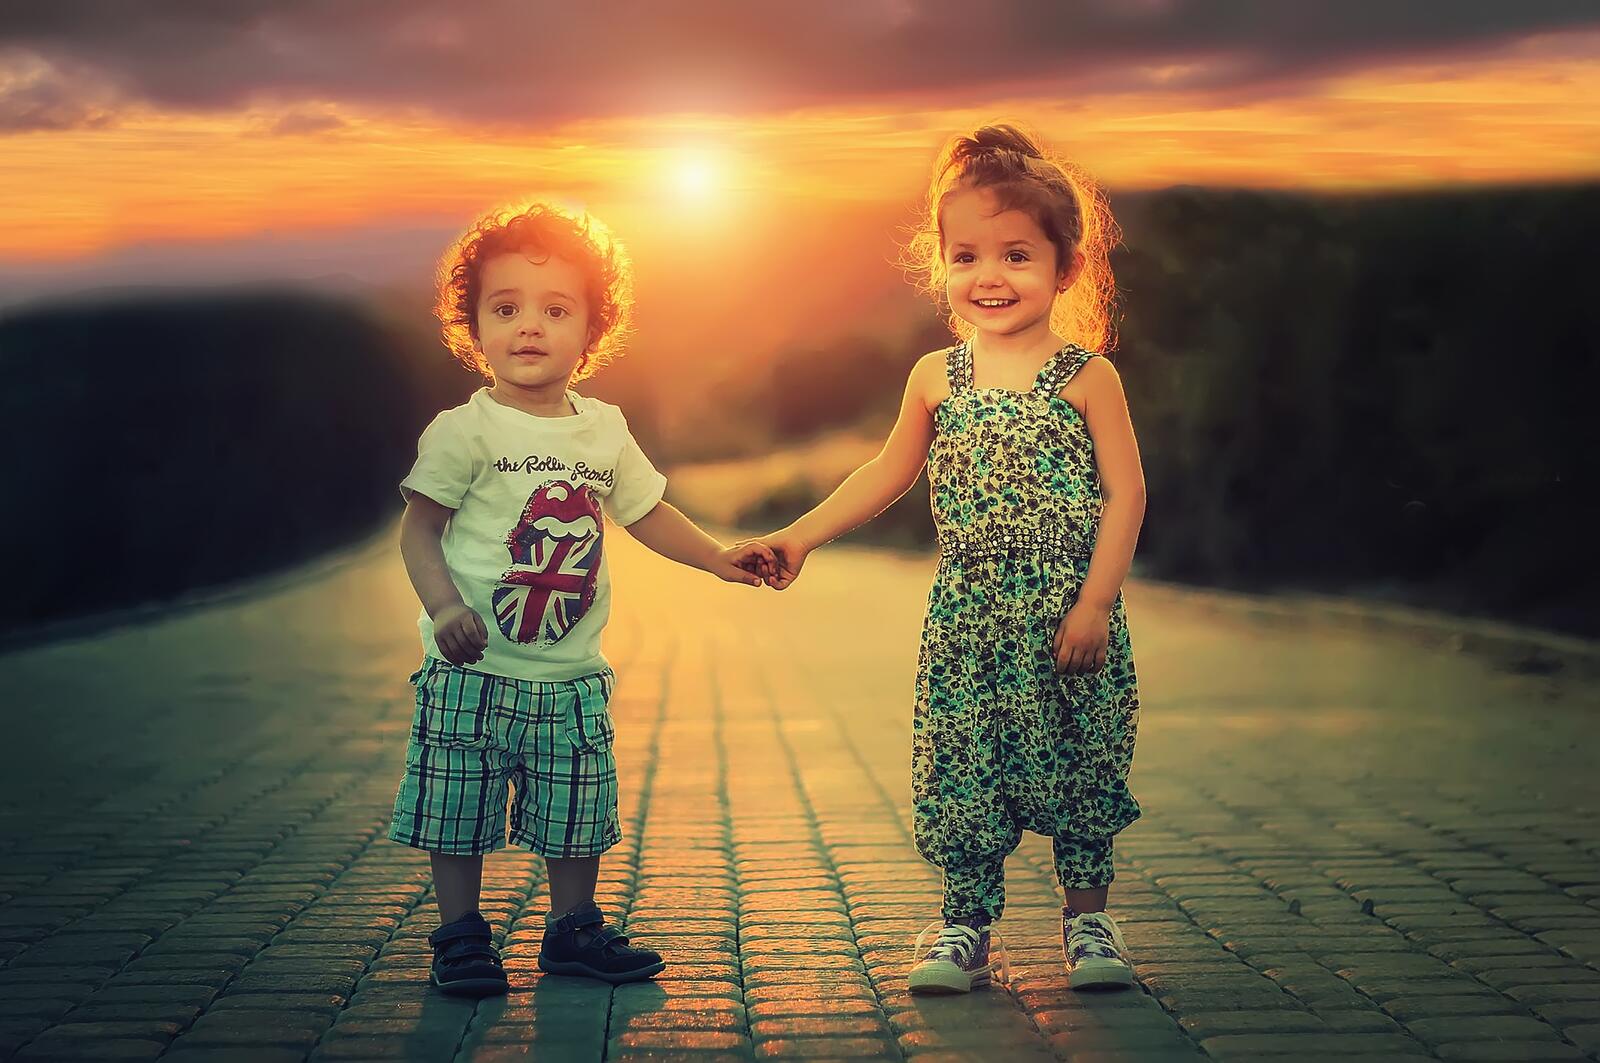 Бесплатное фото Детки держатся за руку на фоне заката